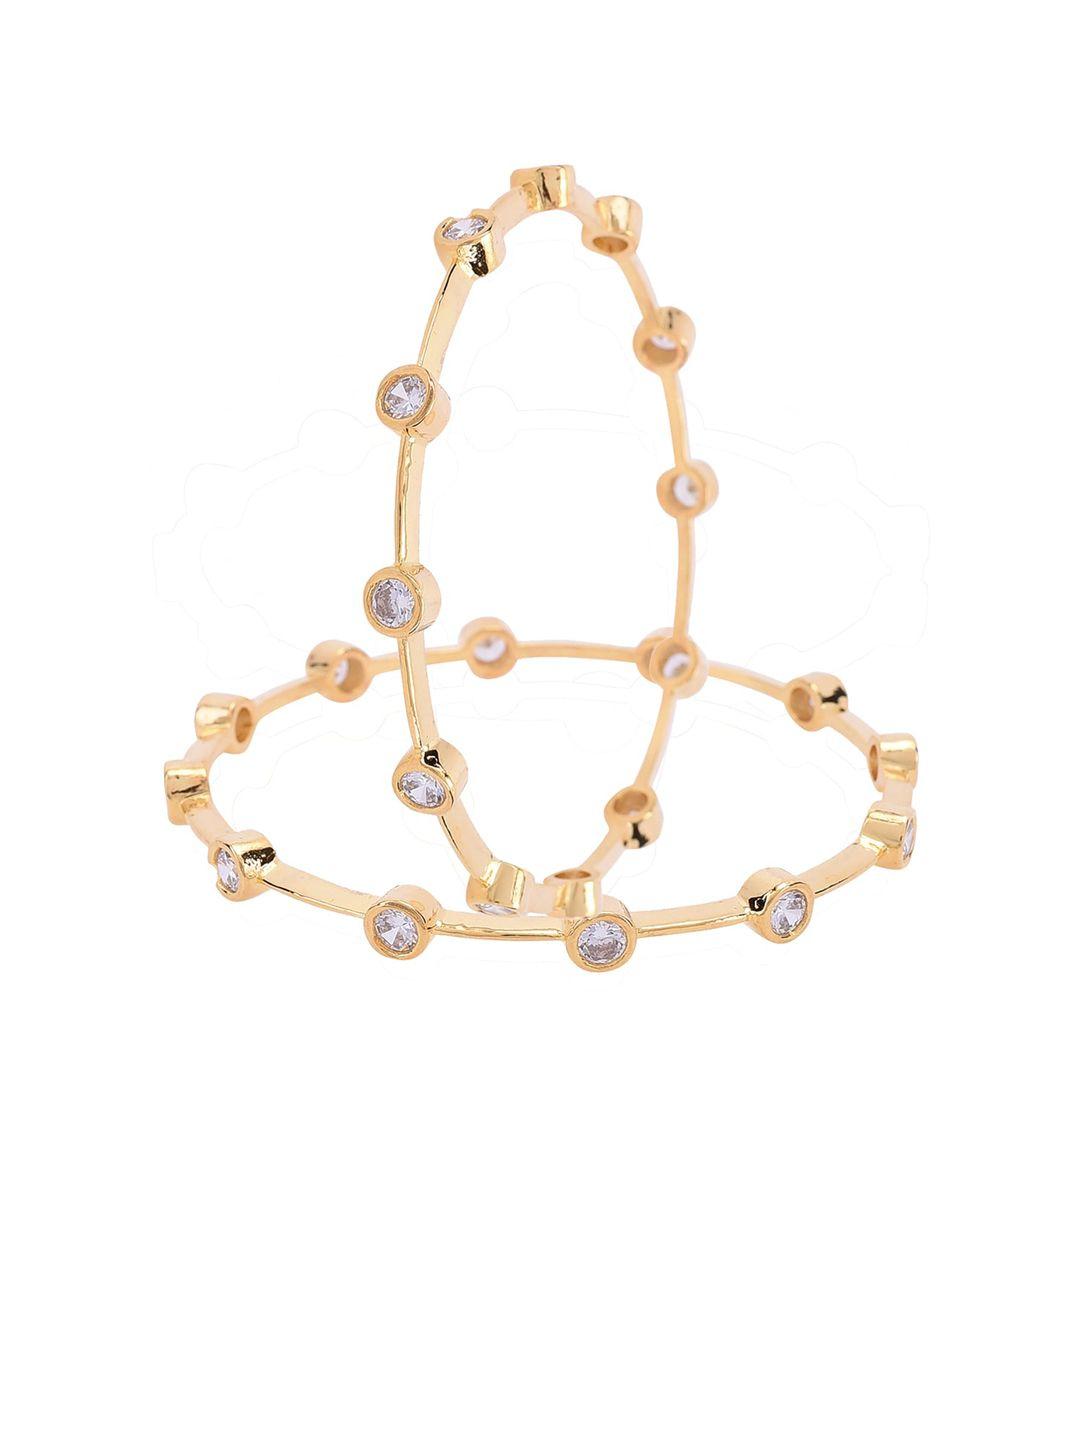 ratnavali jewels set of 2 gold-plated ad-studded bangles